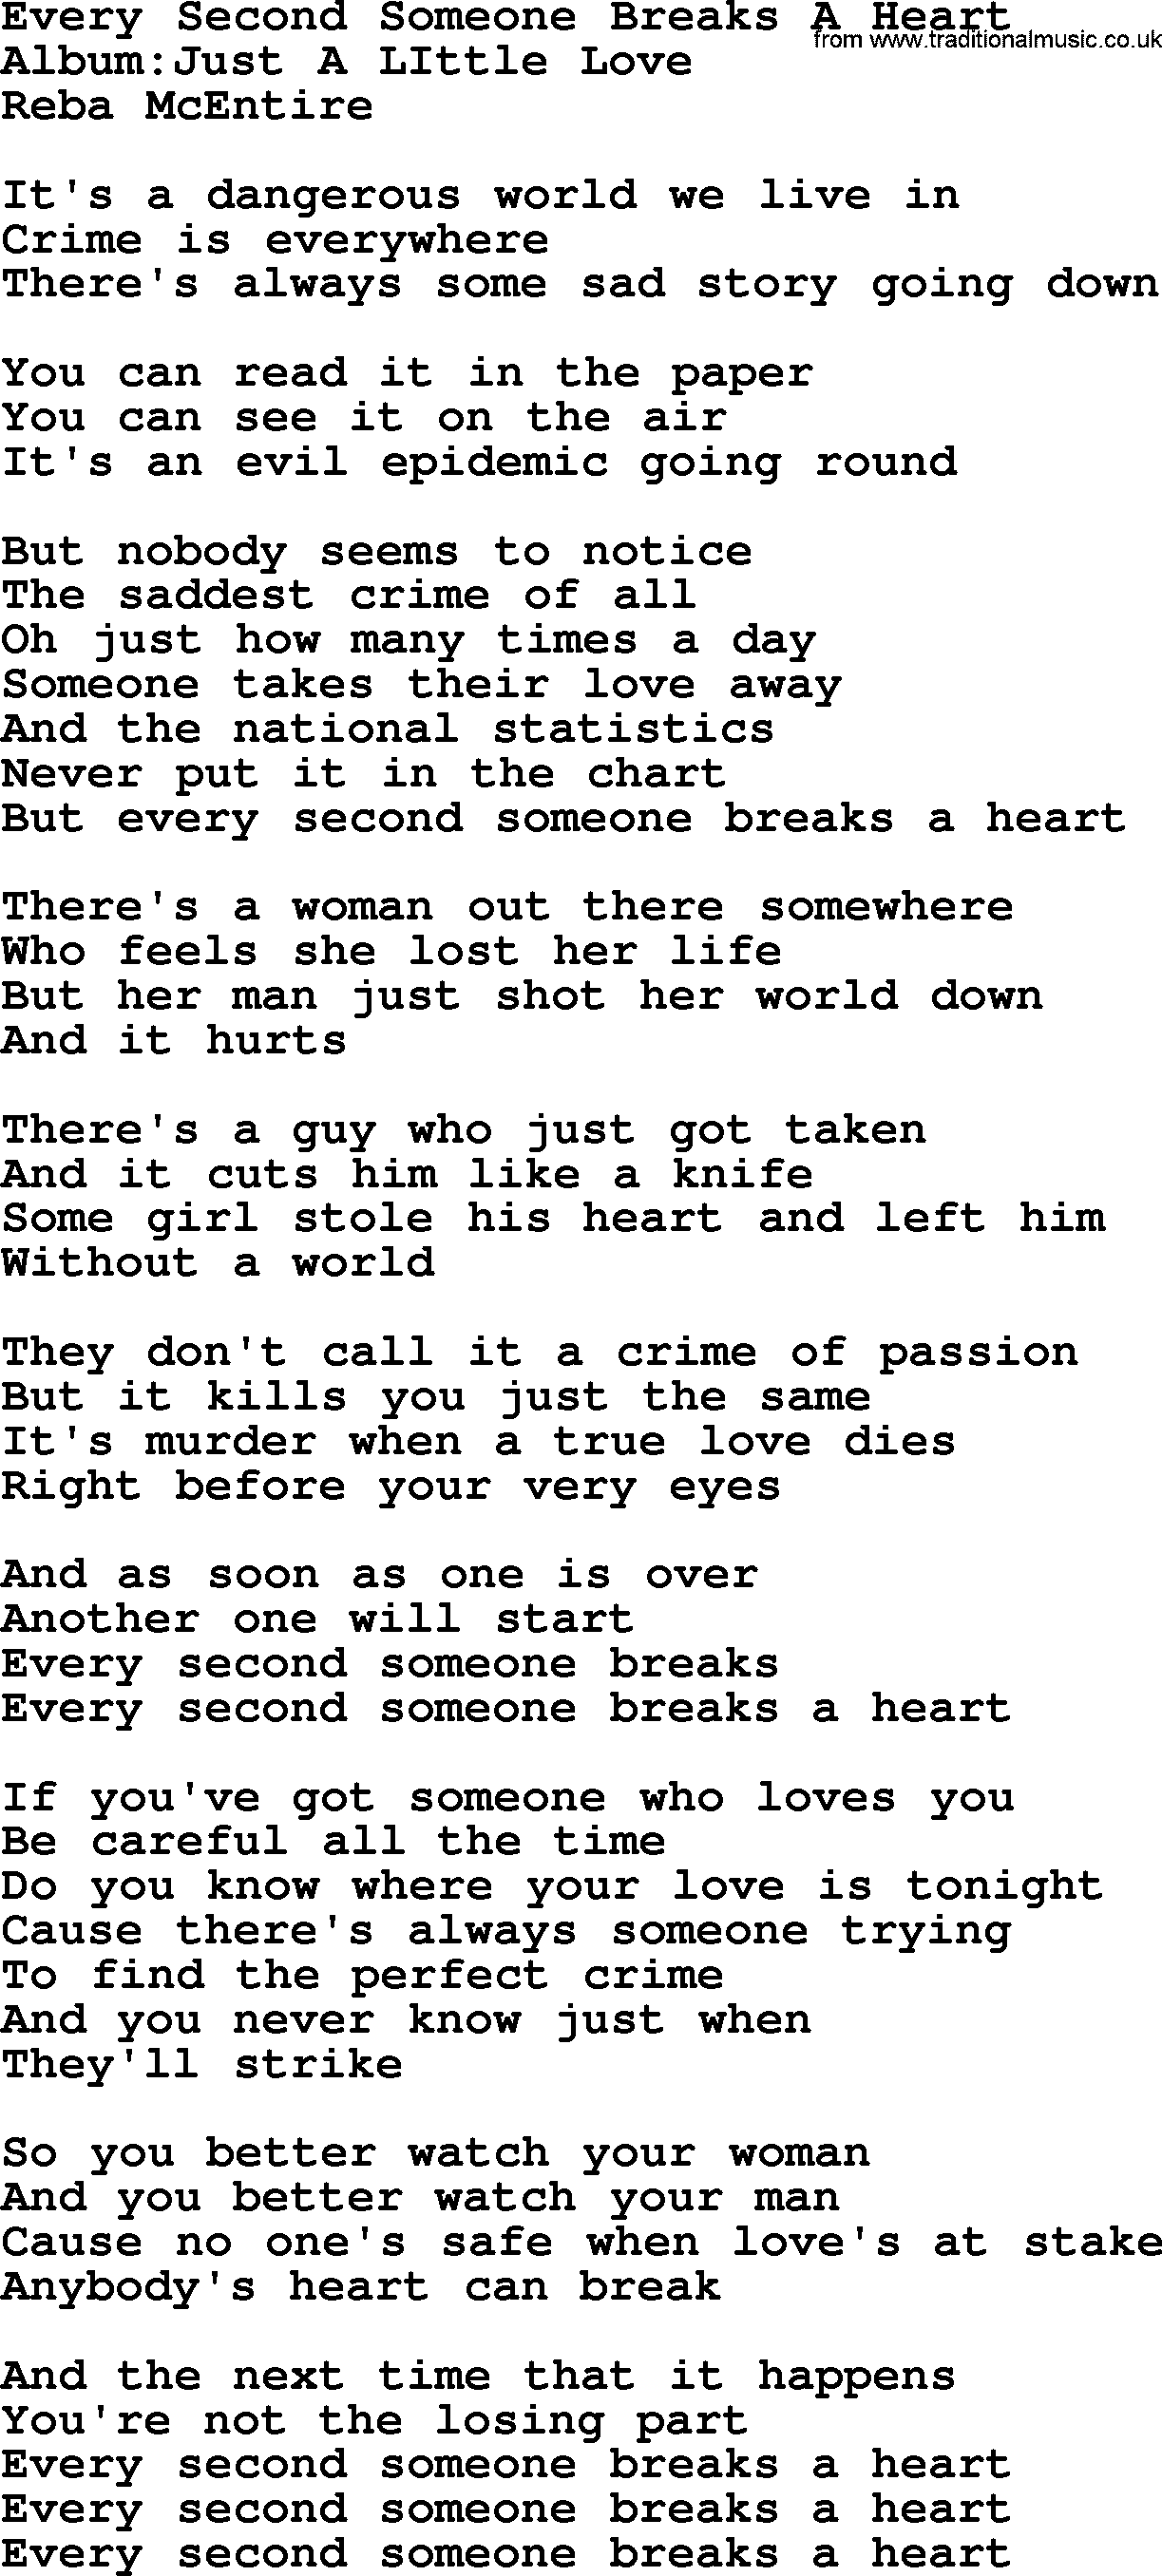 Reba McEntire song: Every Second Someone Breaks A Heart lyrics